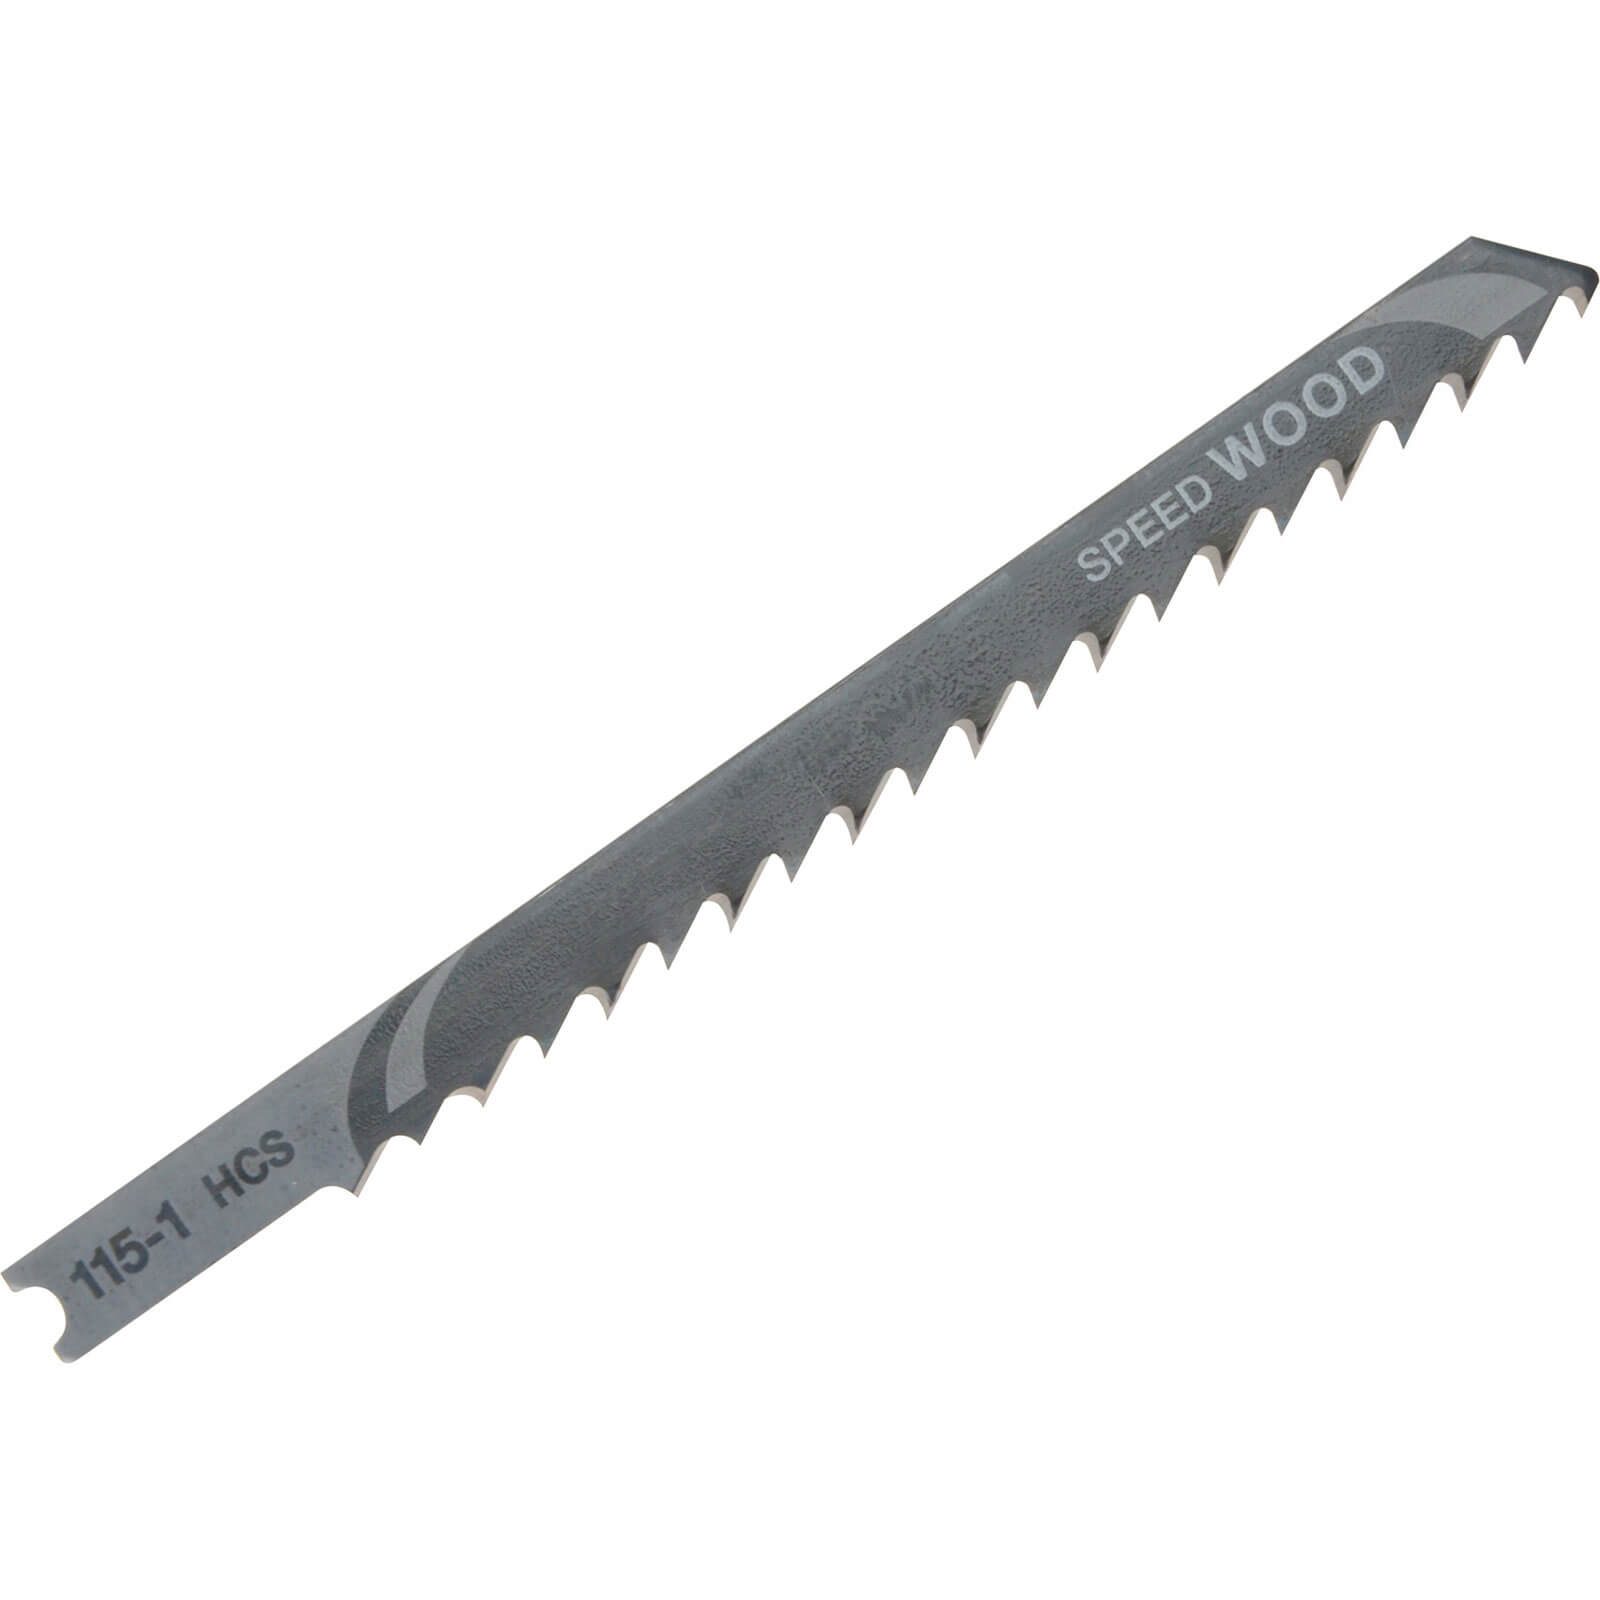 Image of Black and Decker X21033 Piranha Wood HCS Fast U Shank Jigsaw Blades Pack of 3